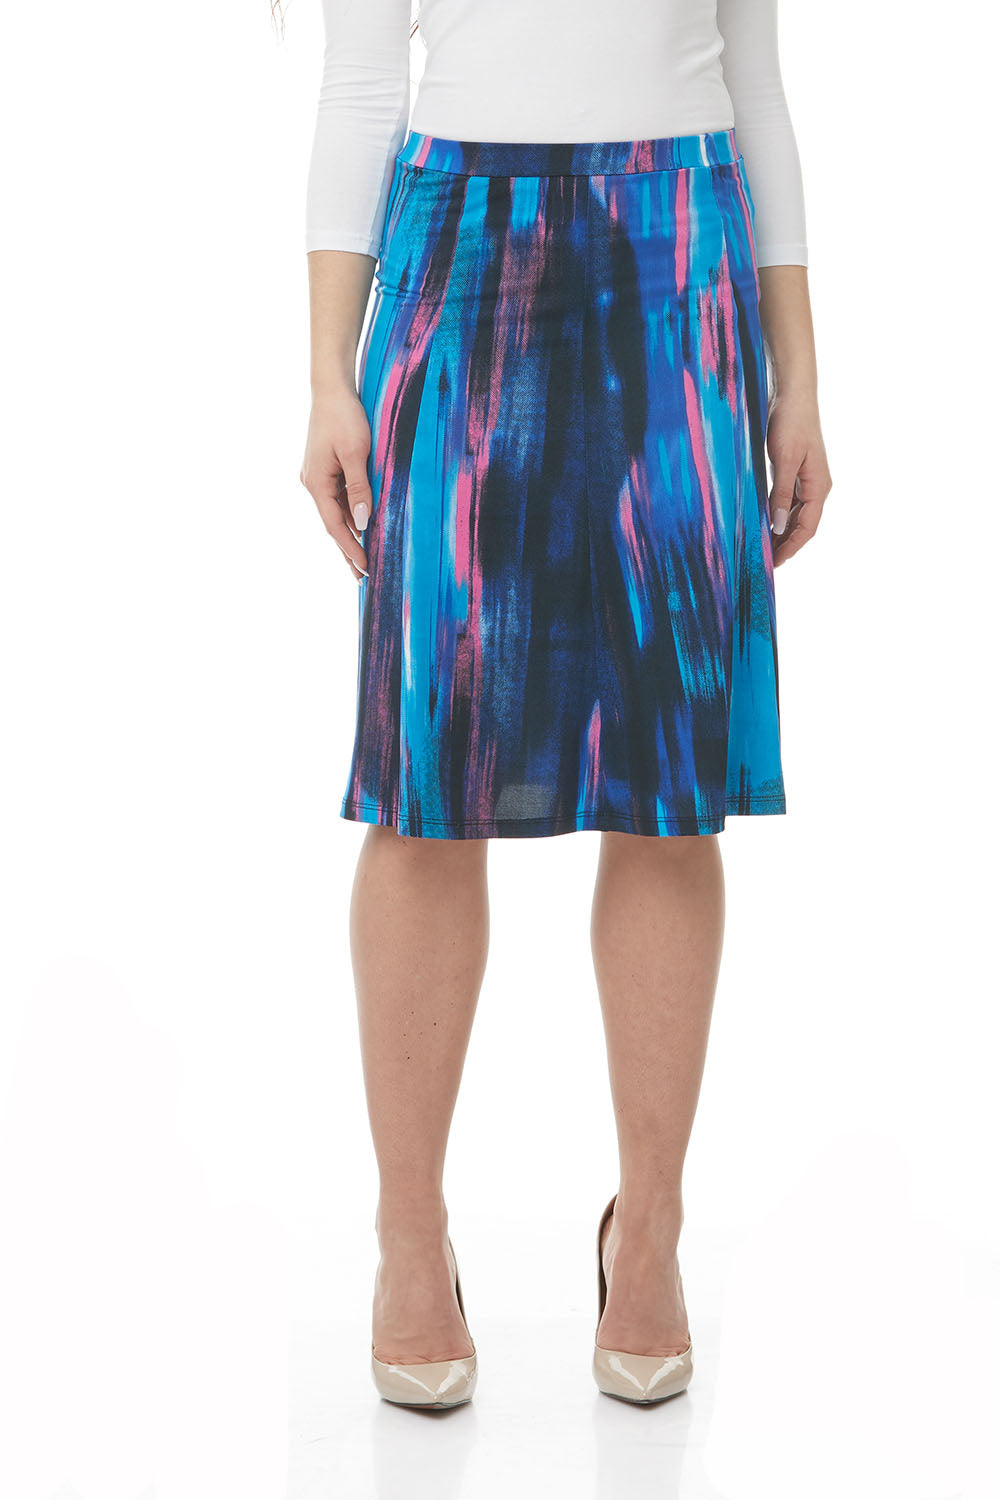 Esteez FLORENCE Modest Skirt for Women with Knee Length A-line design